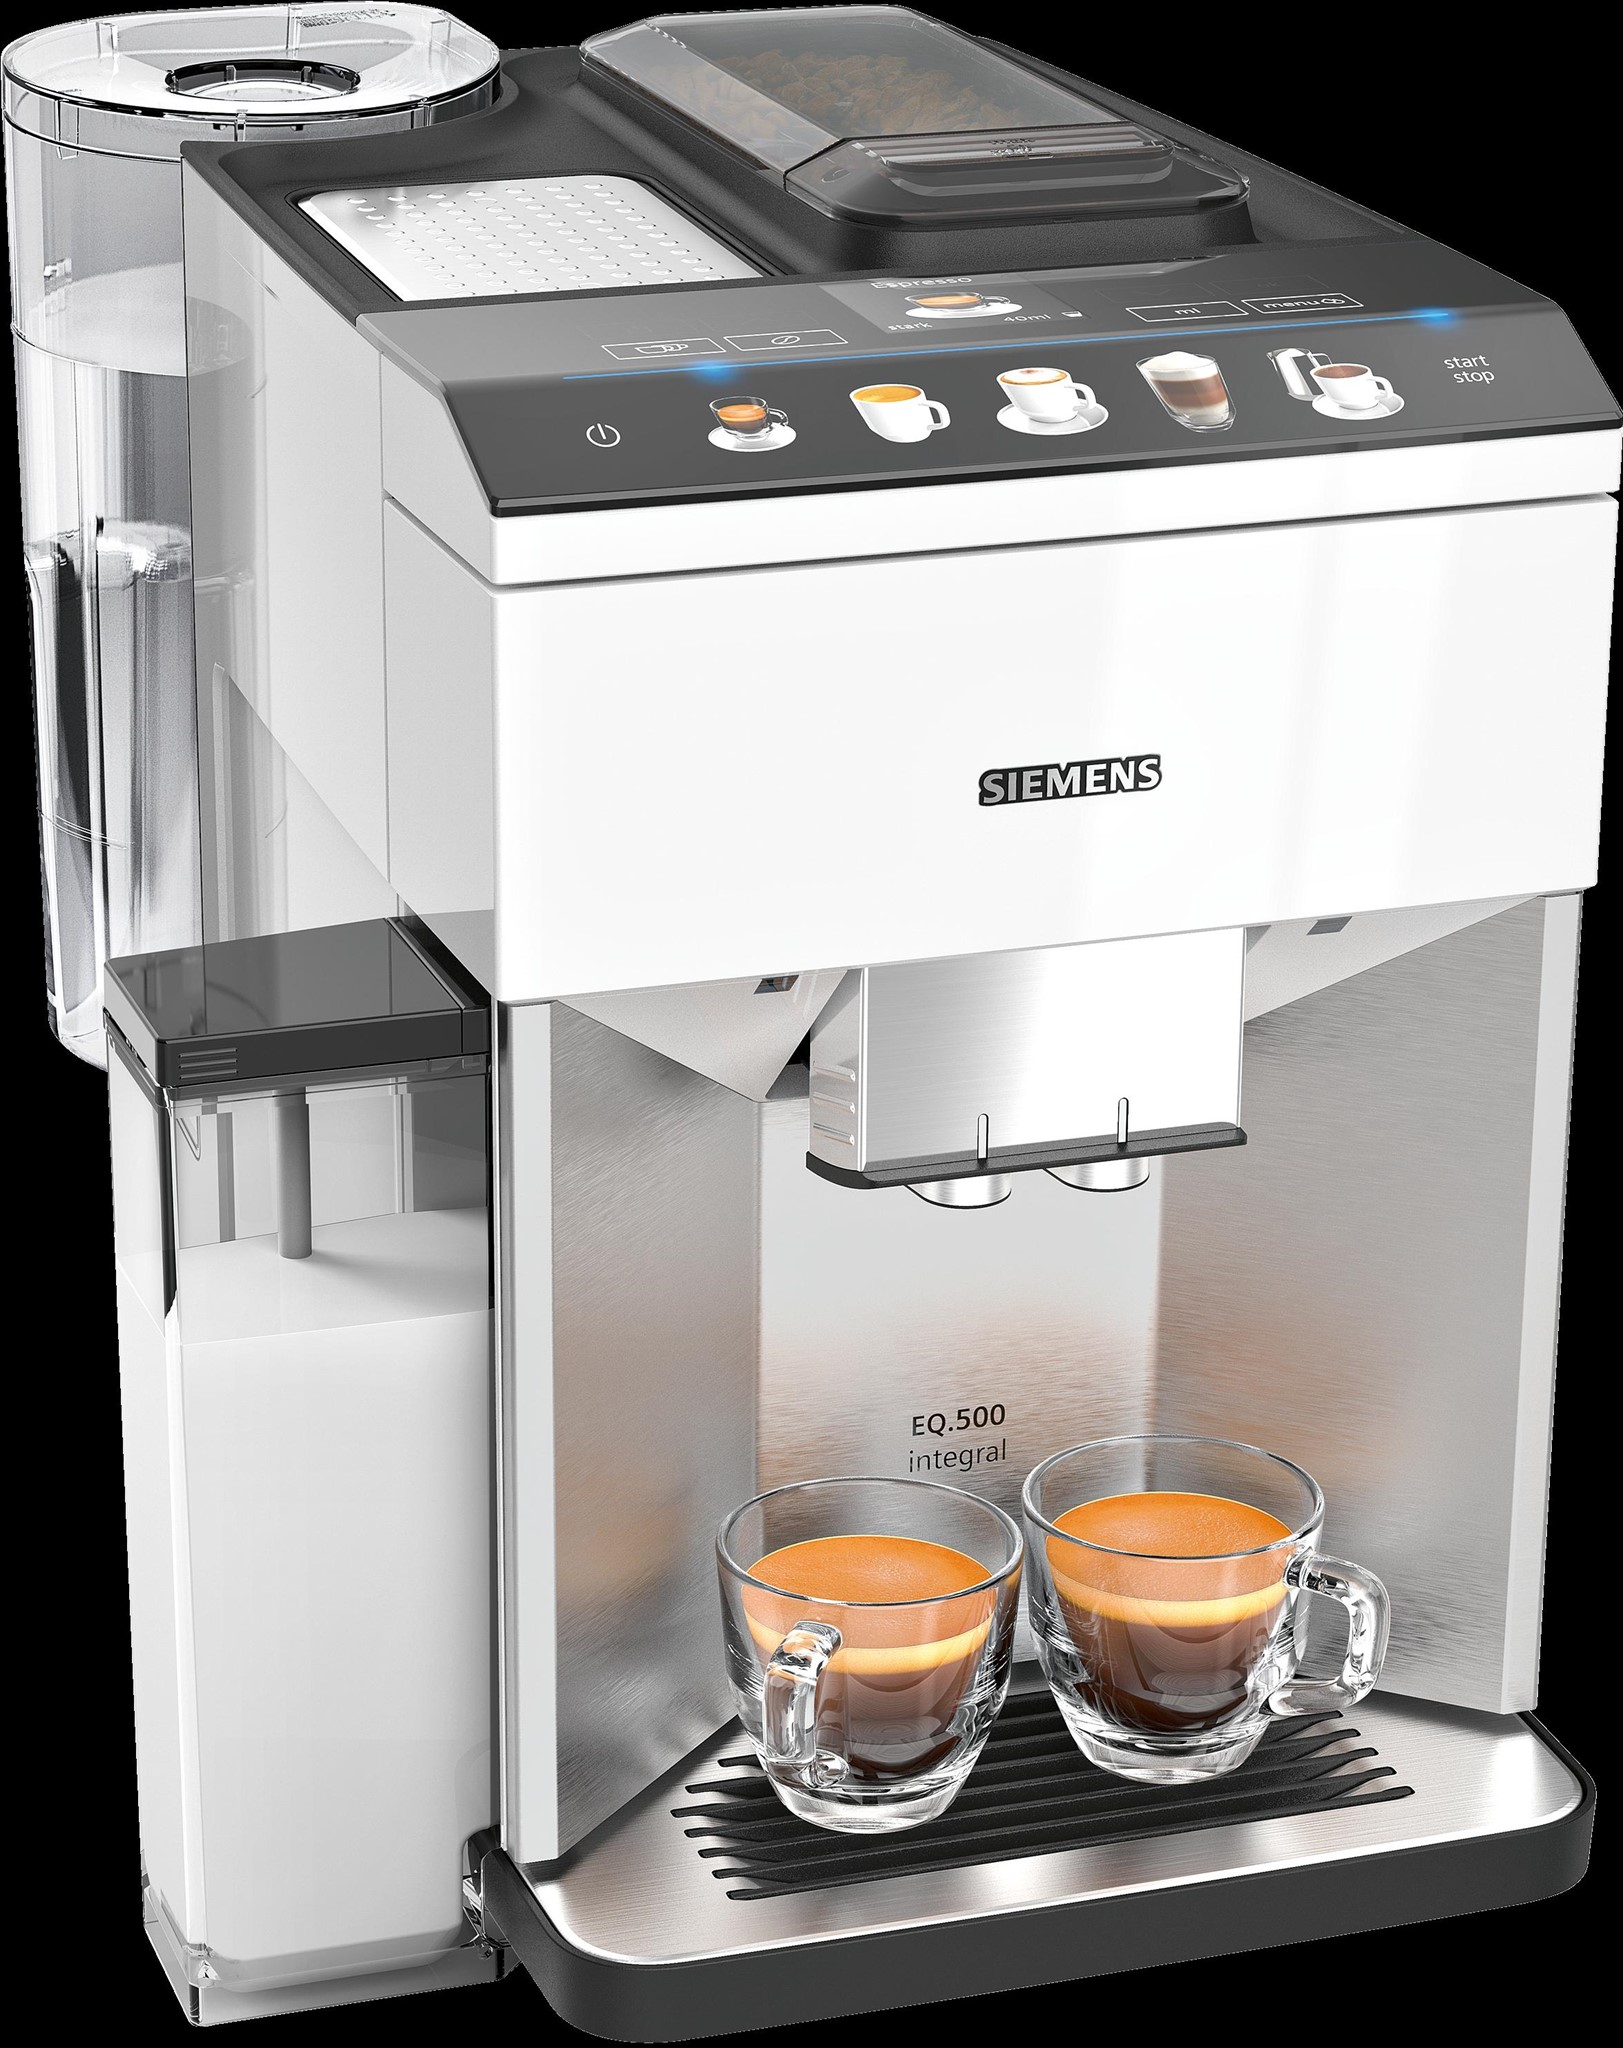 Siemens Kaffee-Vollautomat EQ.500 integral Edelstahl, GmbH TQ507D02, 4242003837467-Silvertech